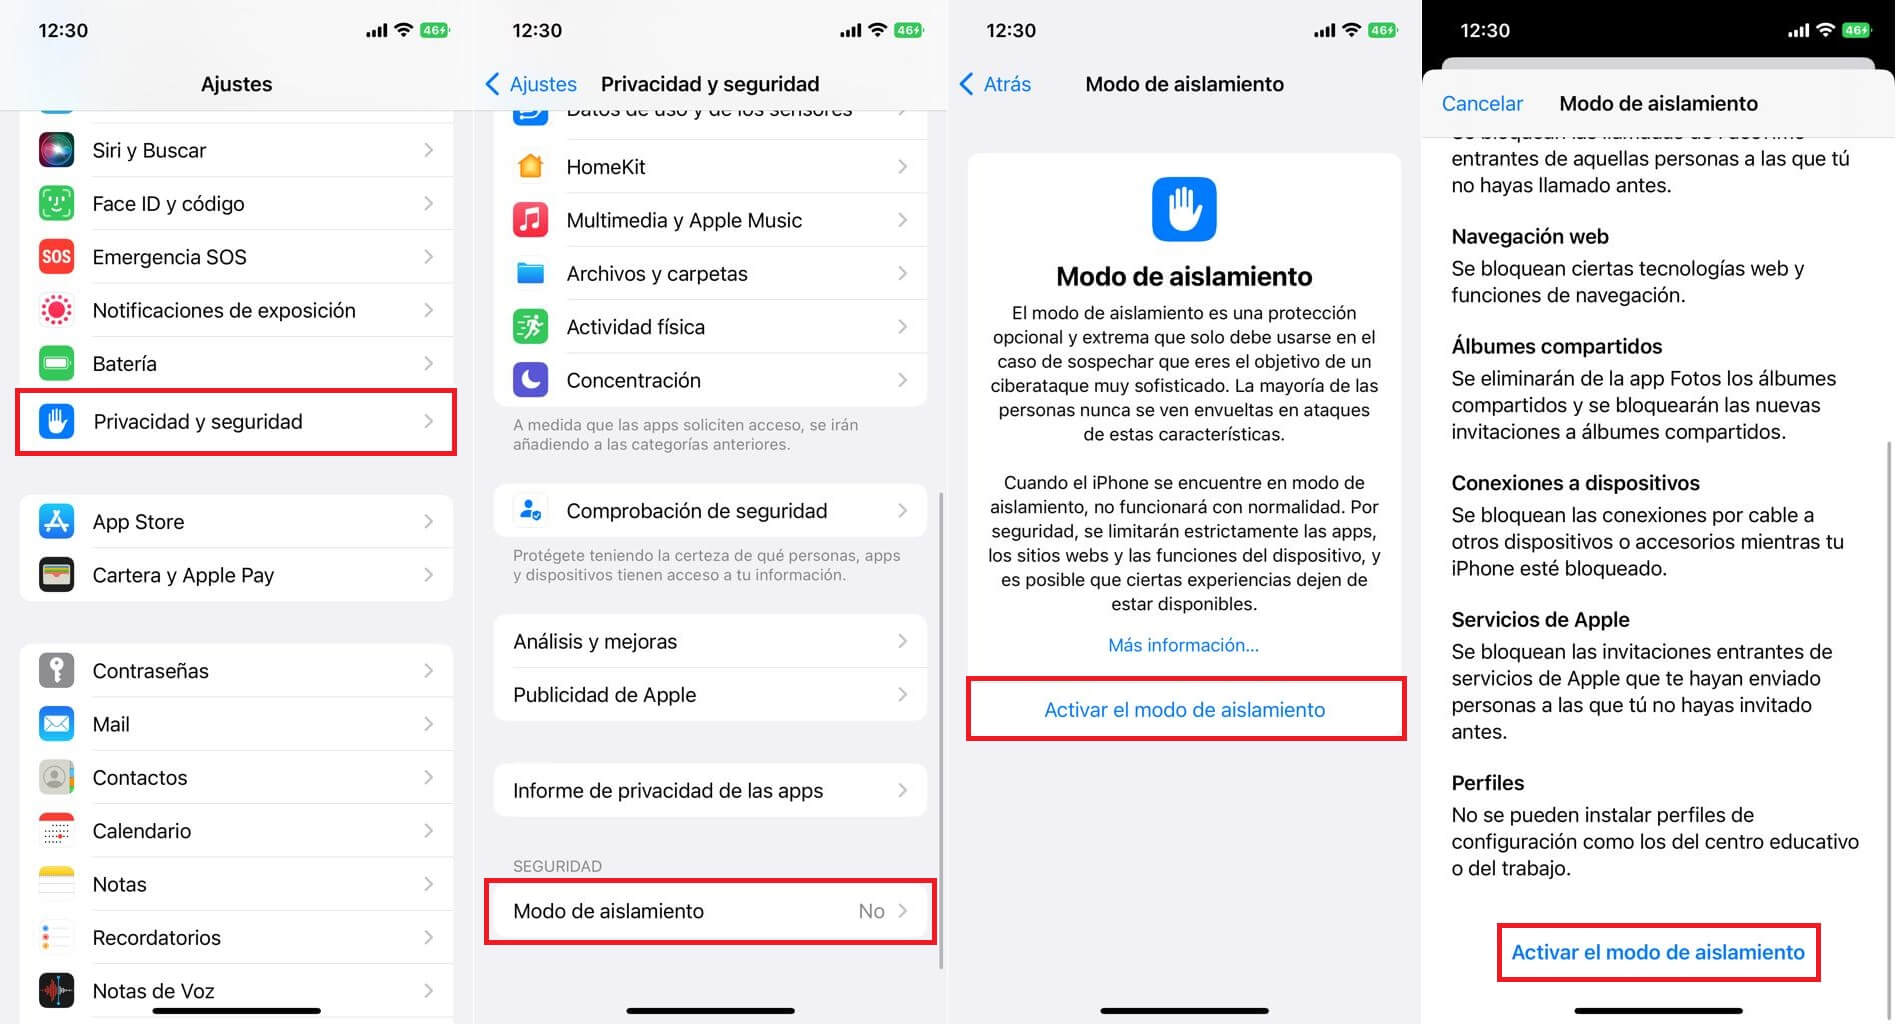 como activar o desactivar el modo de aislamiento en iPhone con iOS 16